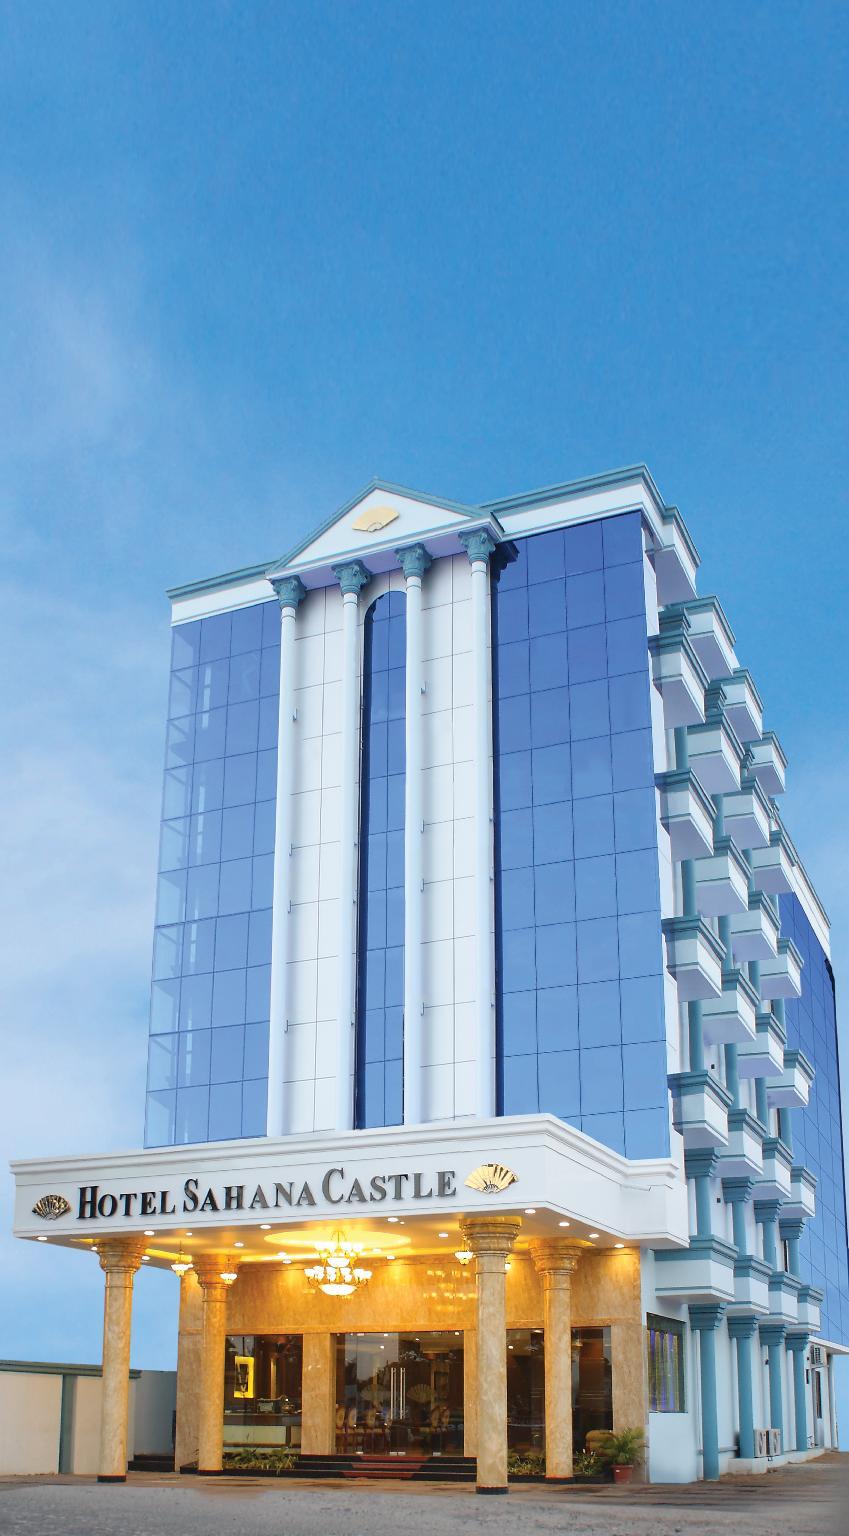 Hotel Sahana Castle - Nagercoil - Nagercoil